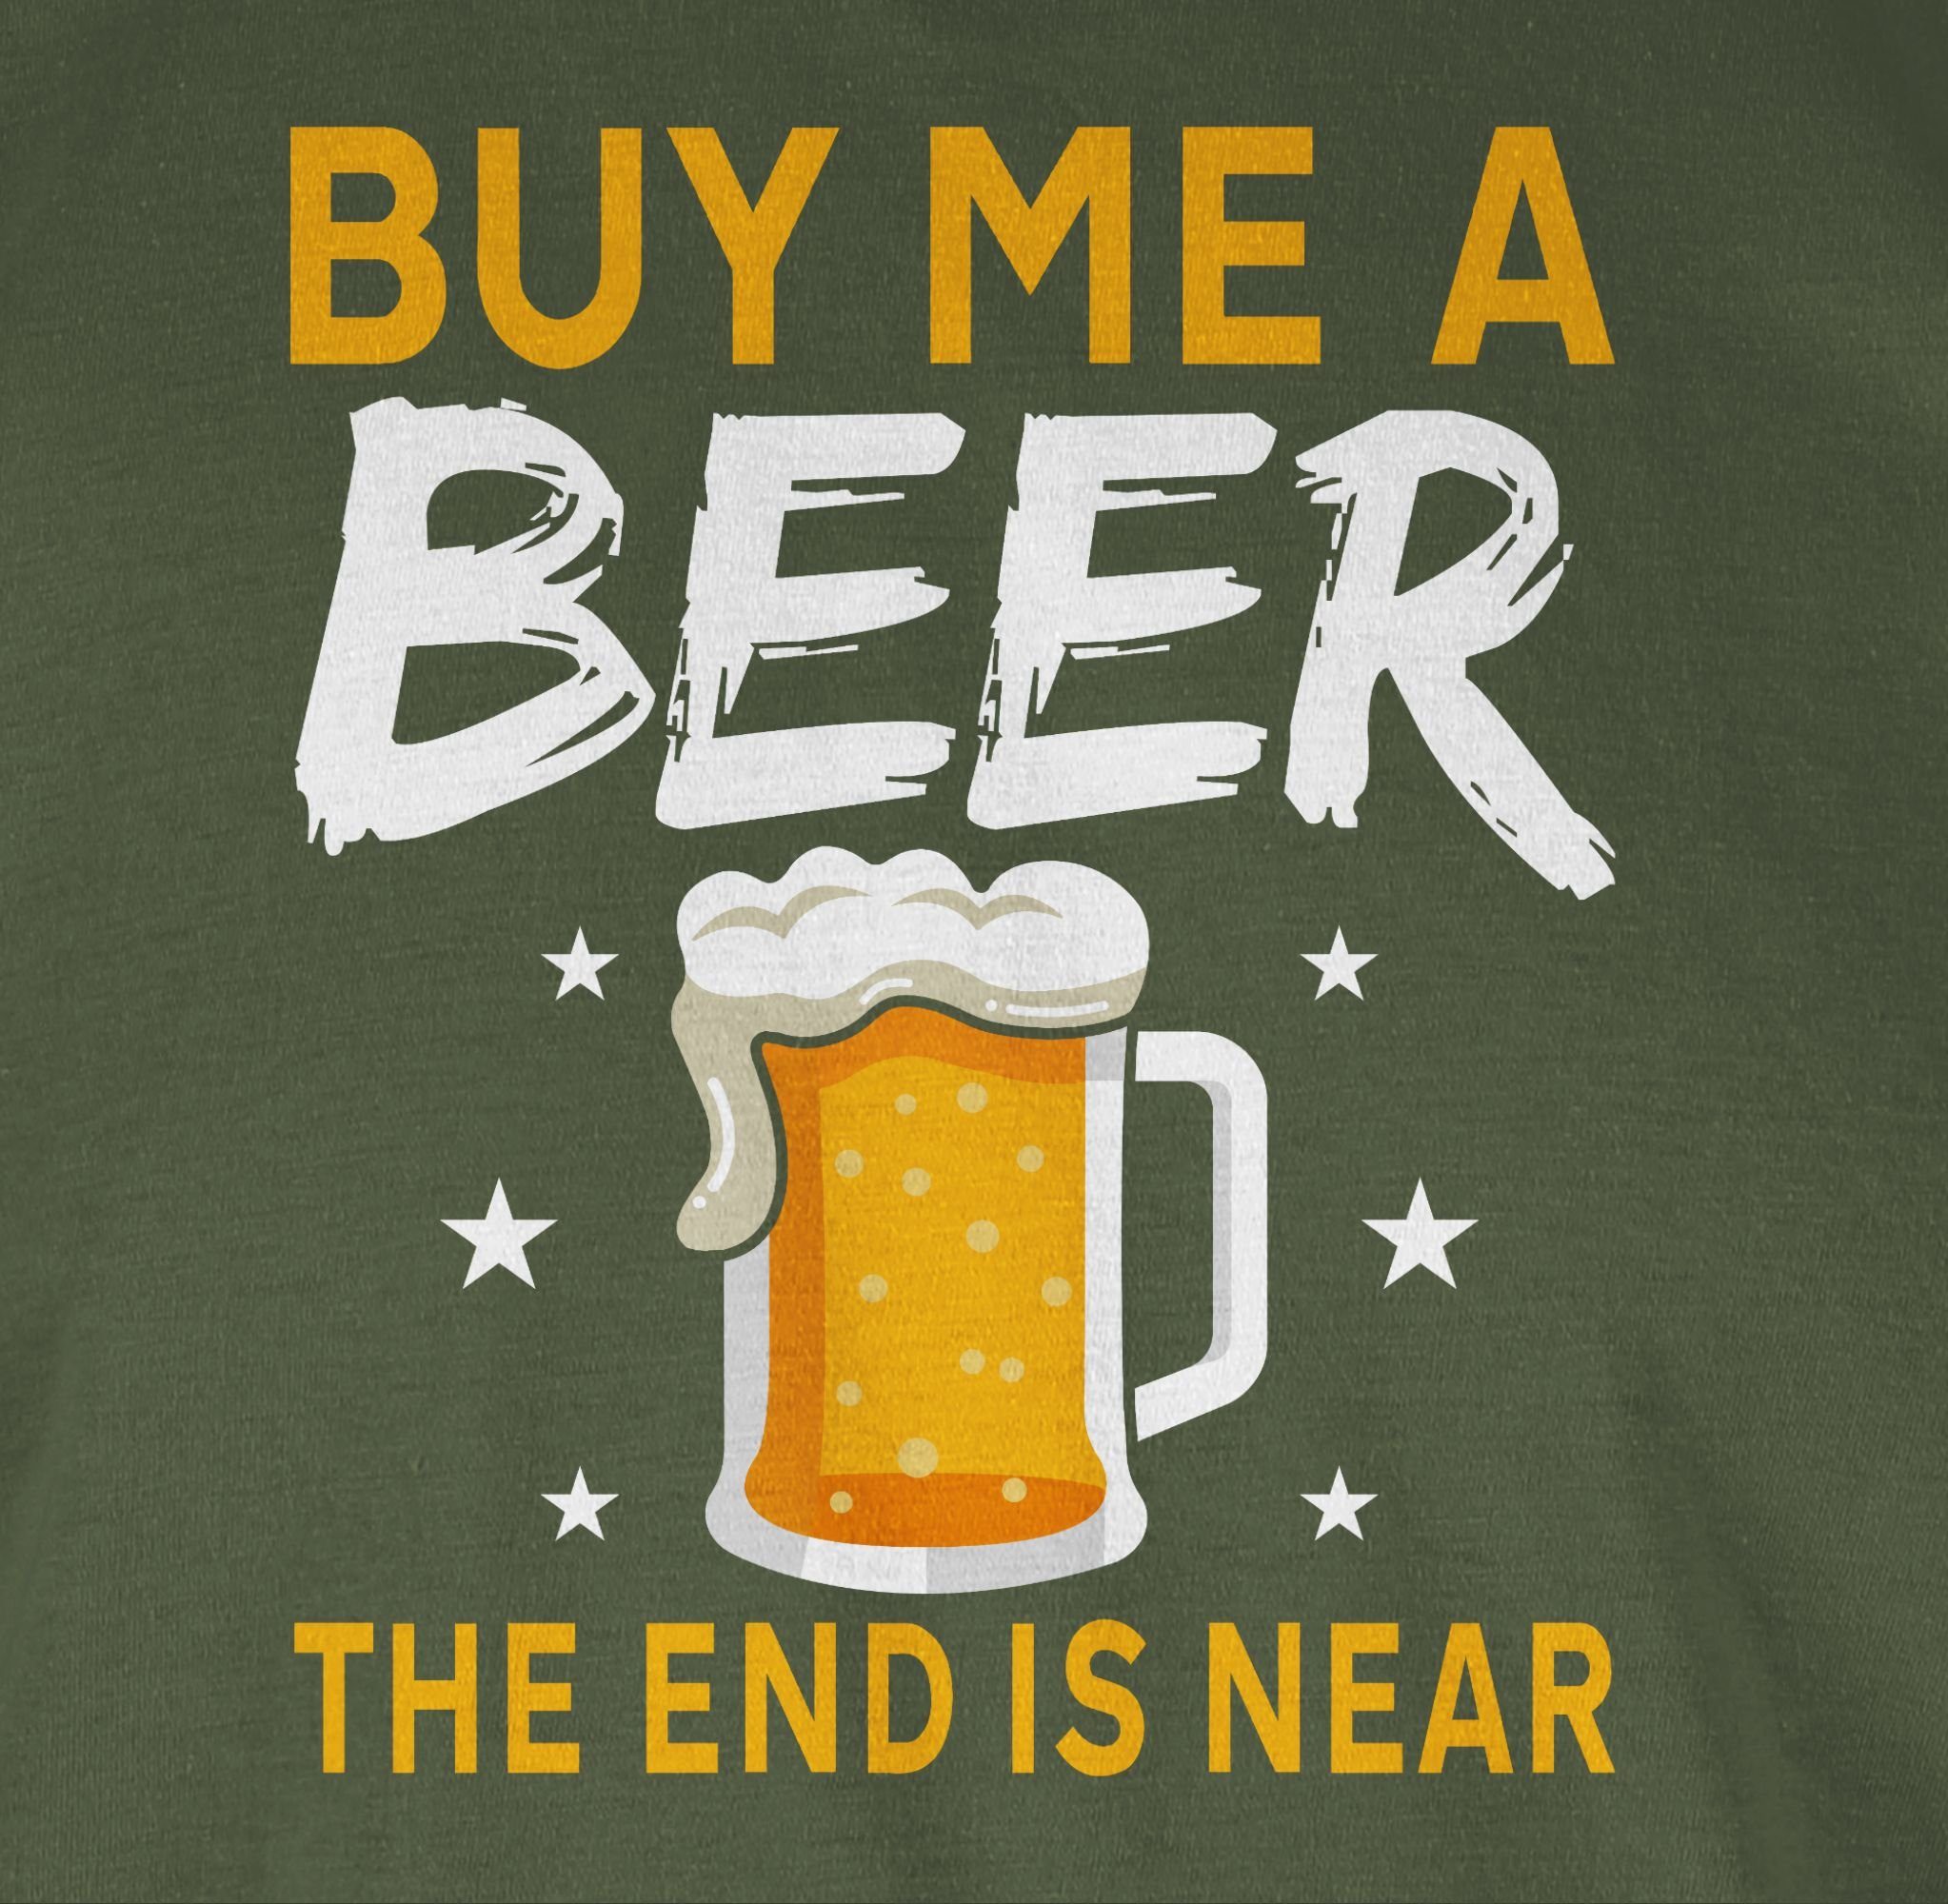 Shirtracer T-Shirt Sterne Bier end Männer Grün Army me JGA a Buy near beer the 02 is